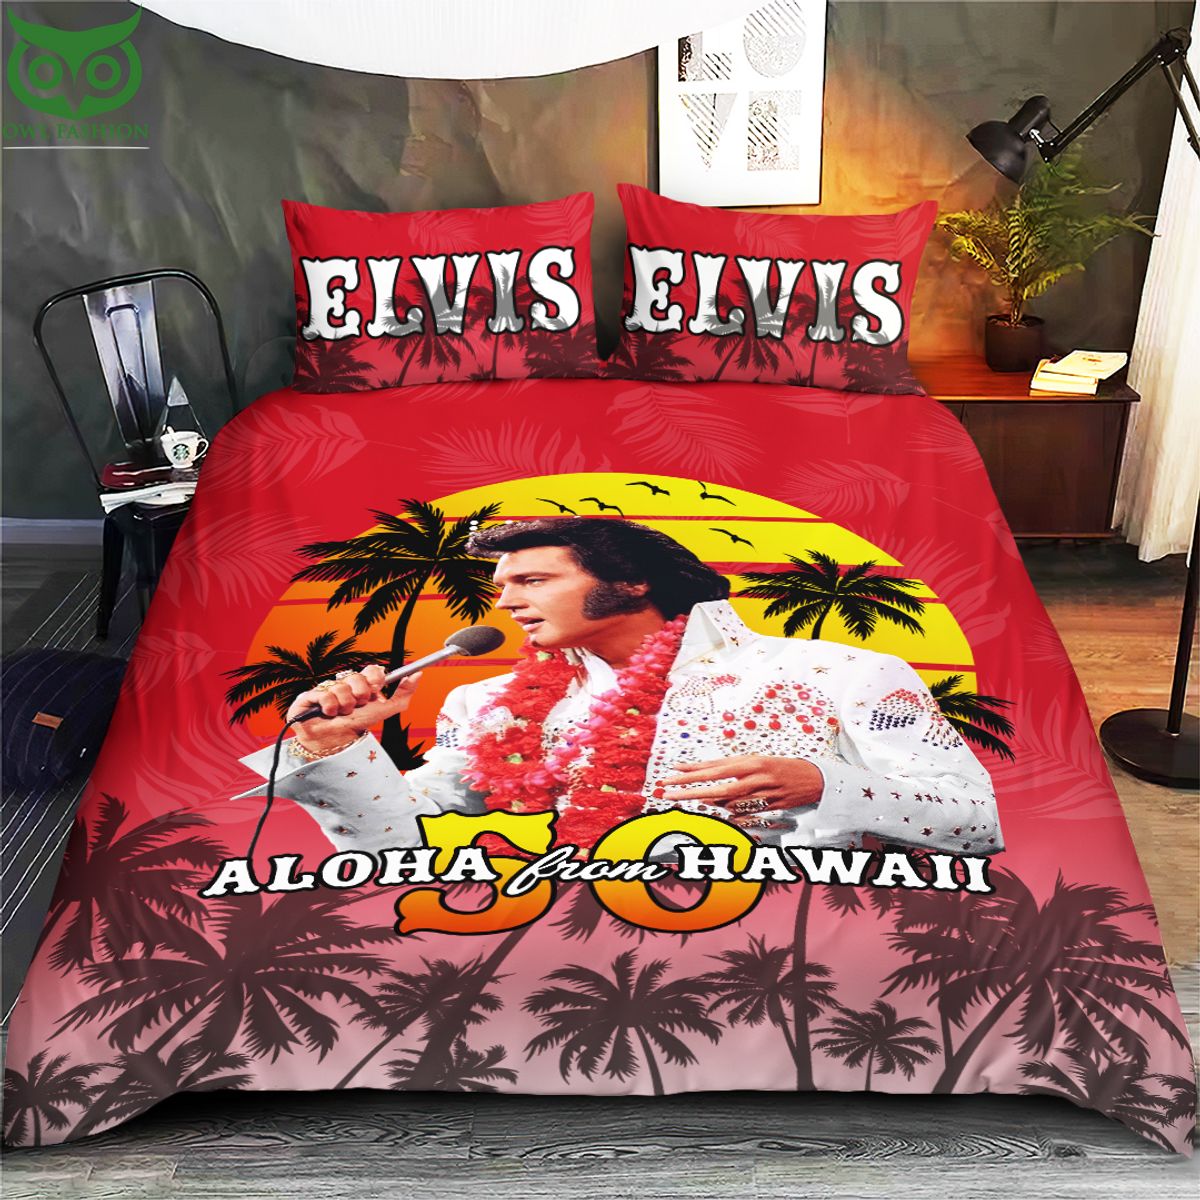 elvis presley aloha from hawaii bedding set 1 I7Q0z.jpg